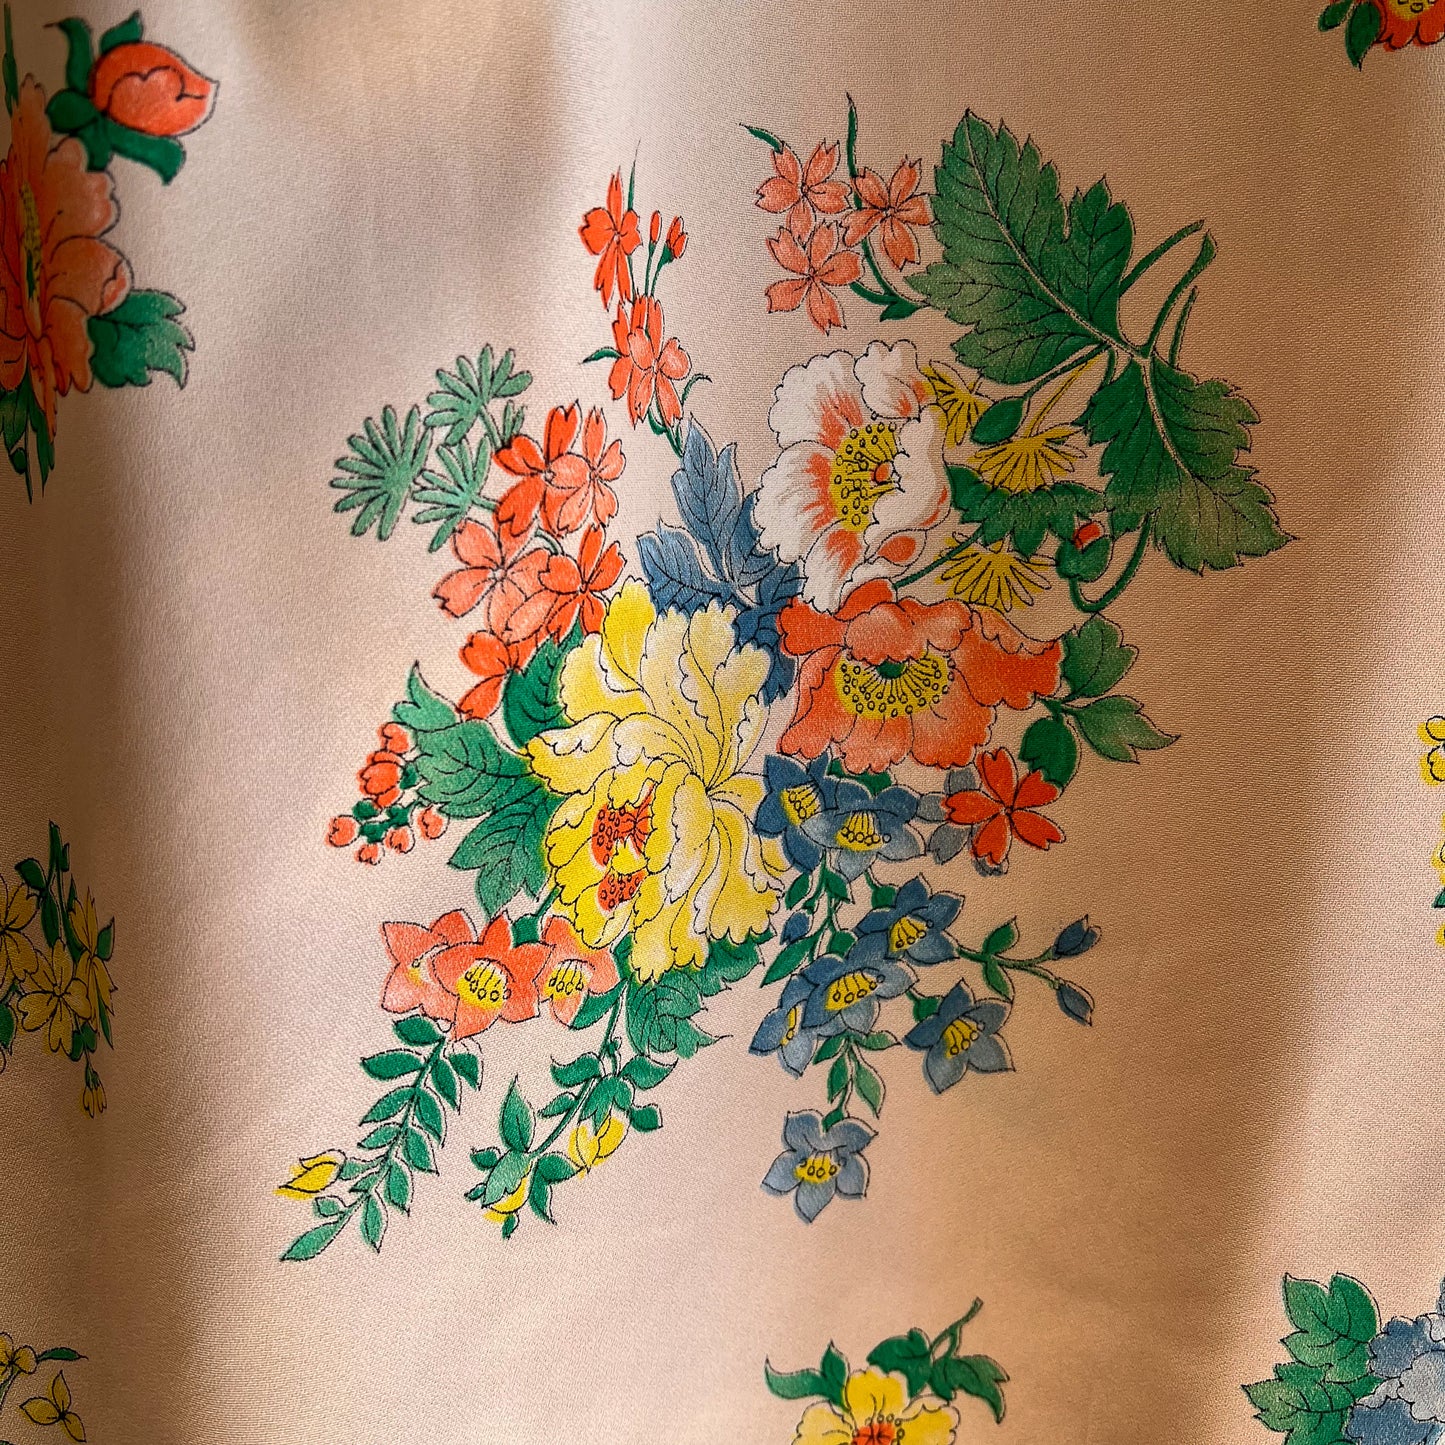 Stunning 1970s Peach Floral Print Halter Maxi Dress (S)